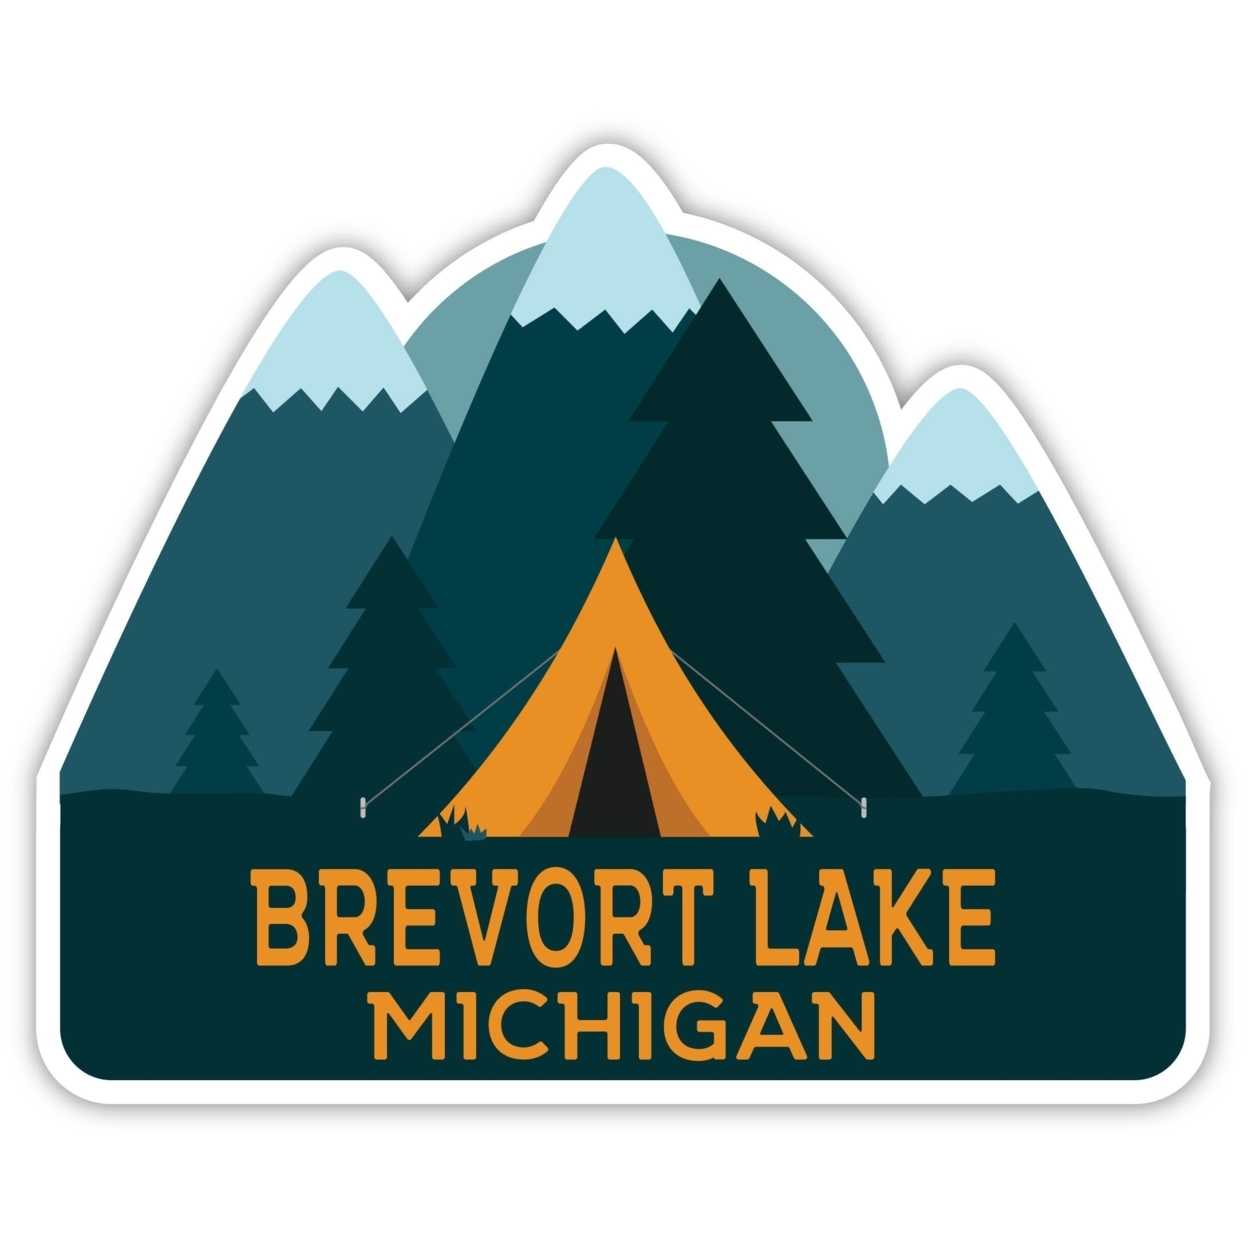 Brevort Lake Michigan Souvenir Decorative Stickers (Choose Theme And Size) - 4-Pack, 6-Inch, Tent